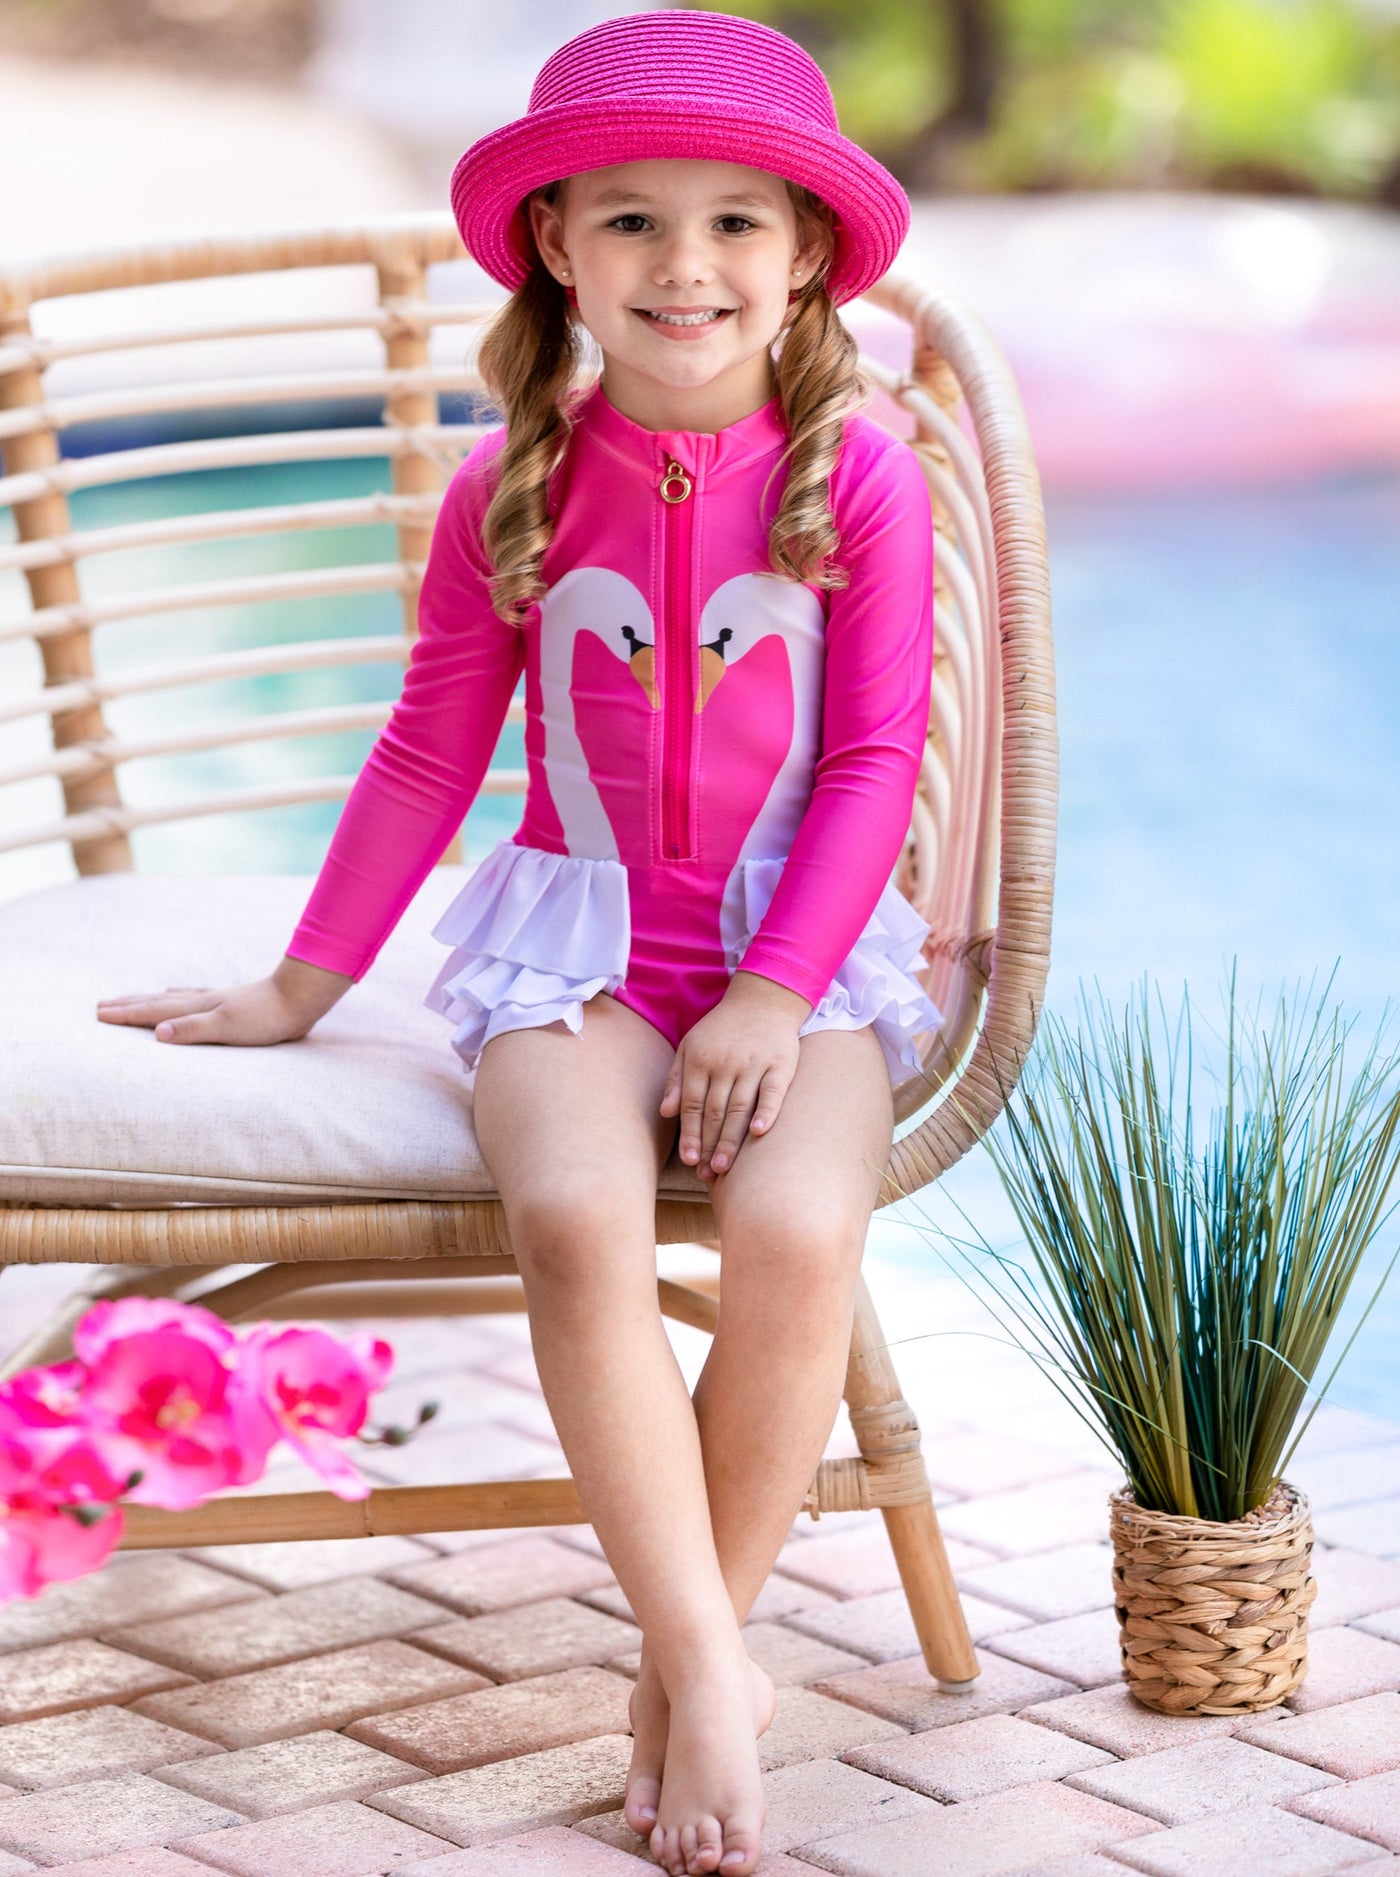 Kids Rash Guard Swimsuit | Pink Swan Long Sleeve Rash Guard Swimsuit